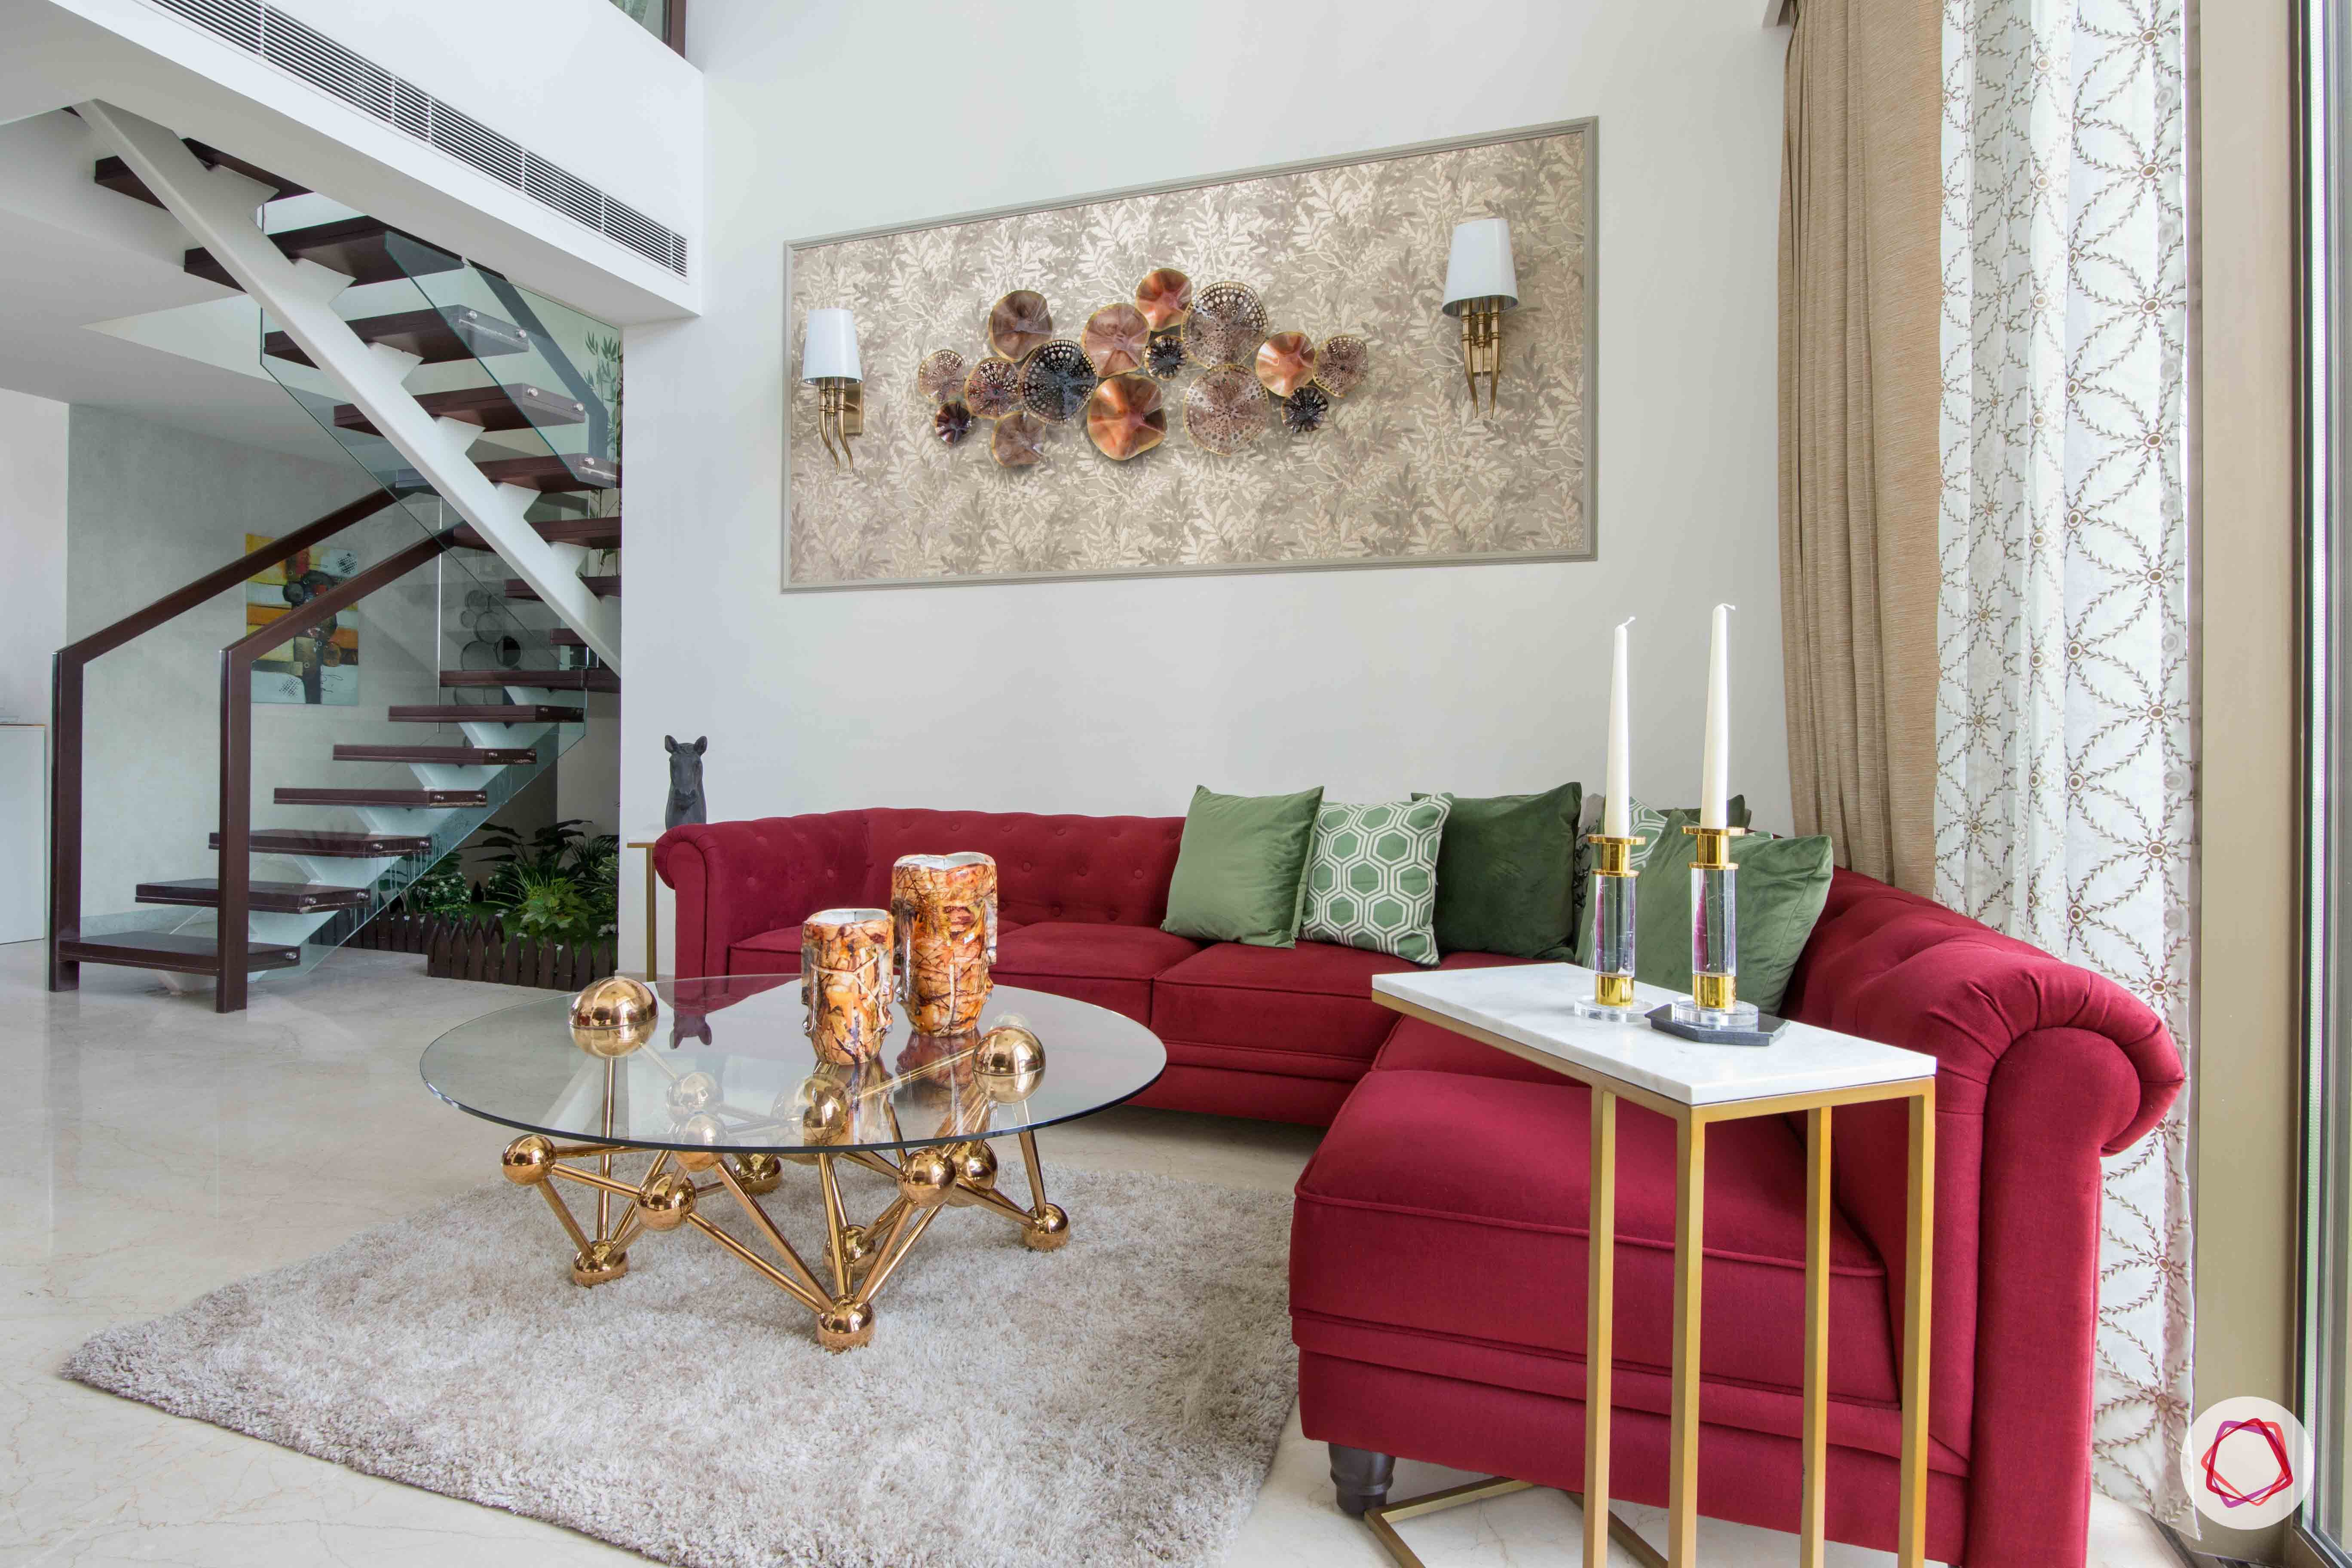 duplex house images-duplex house designs-red sofa designs-side table designs